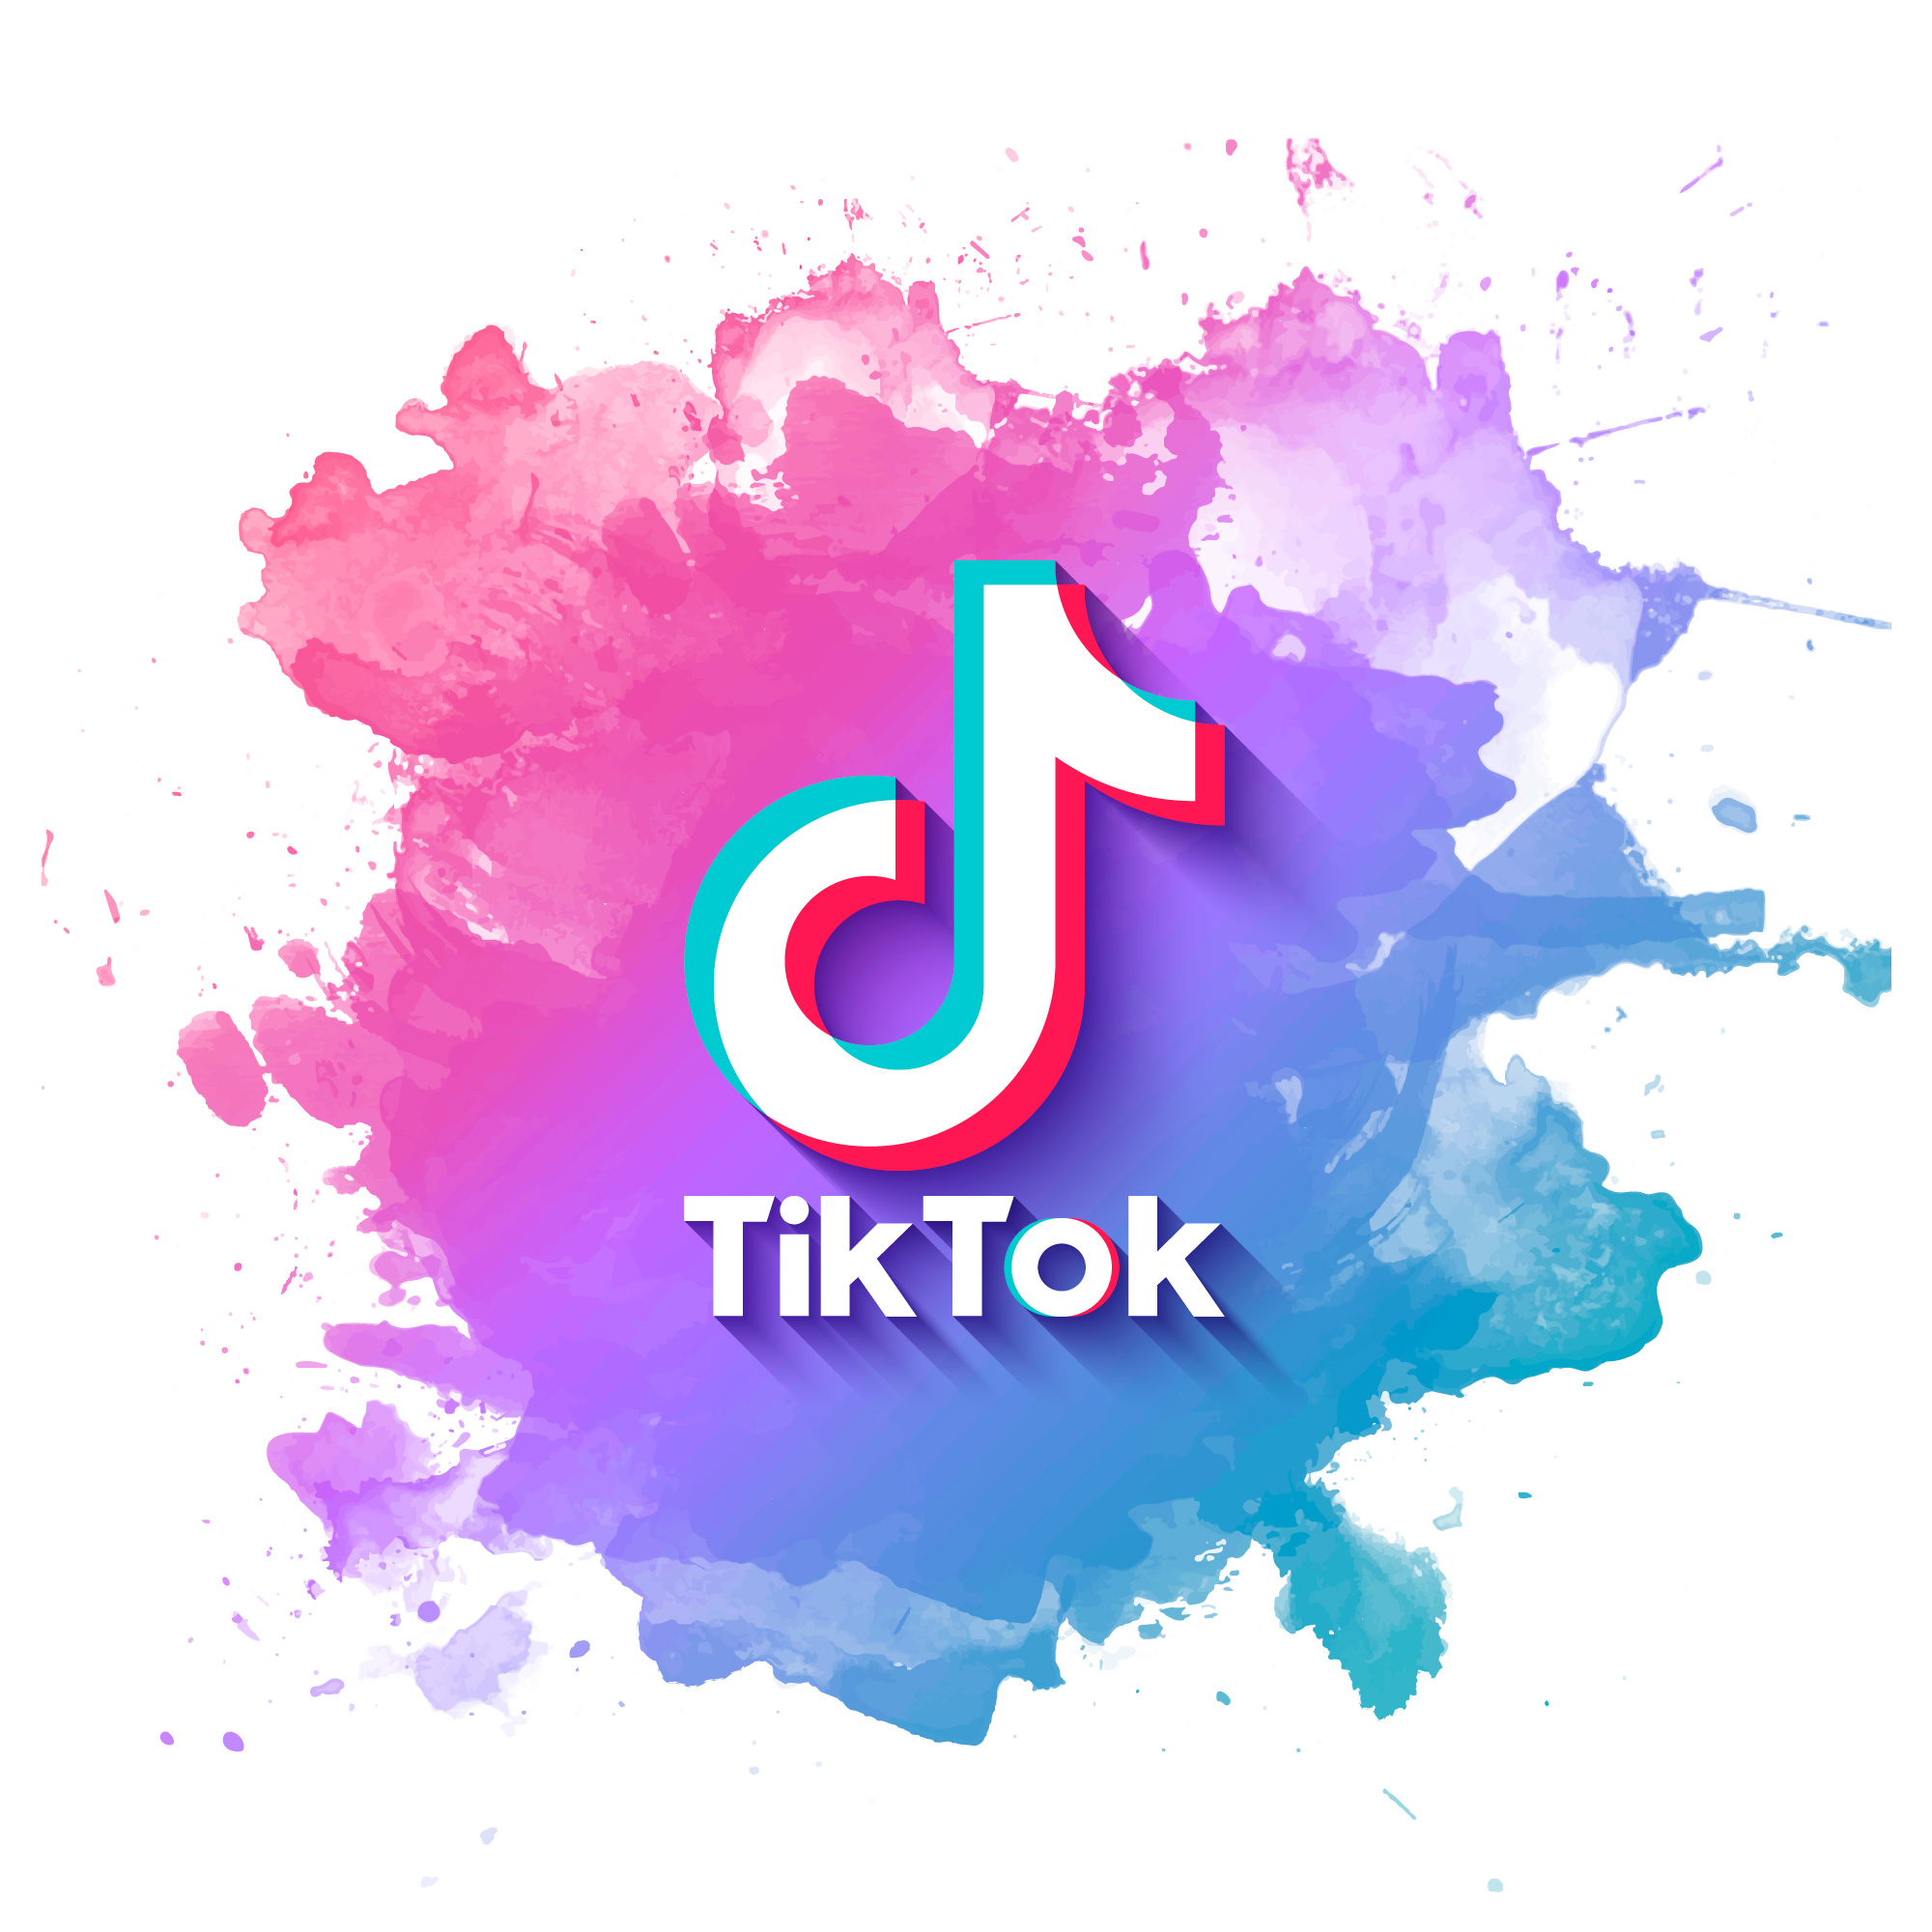 how to deactivate tik tok account temporarily